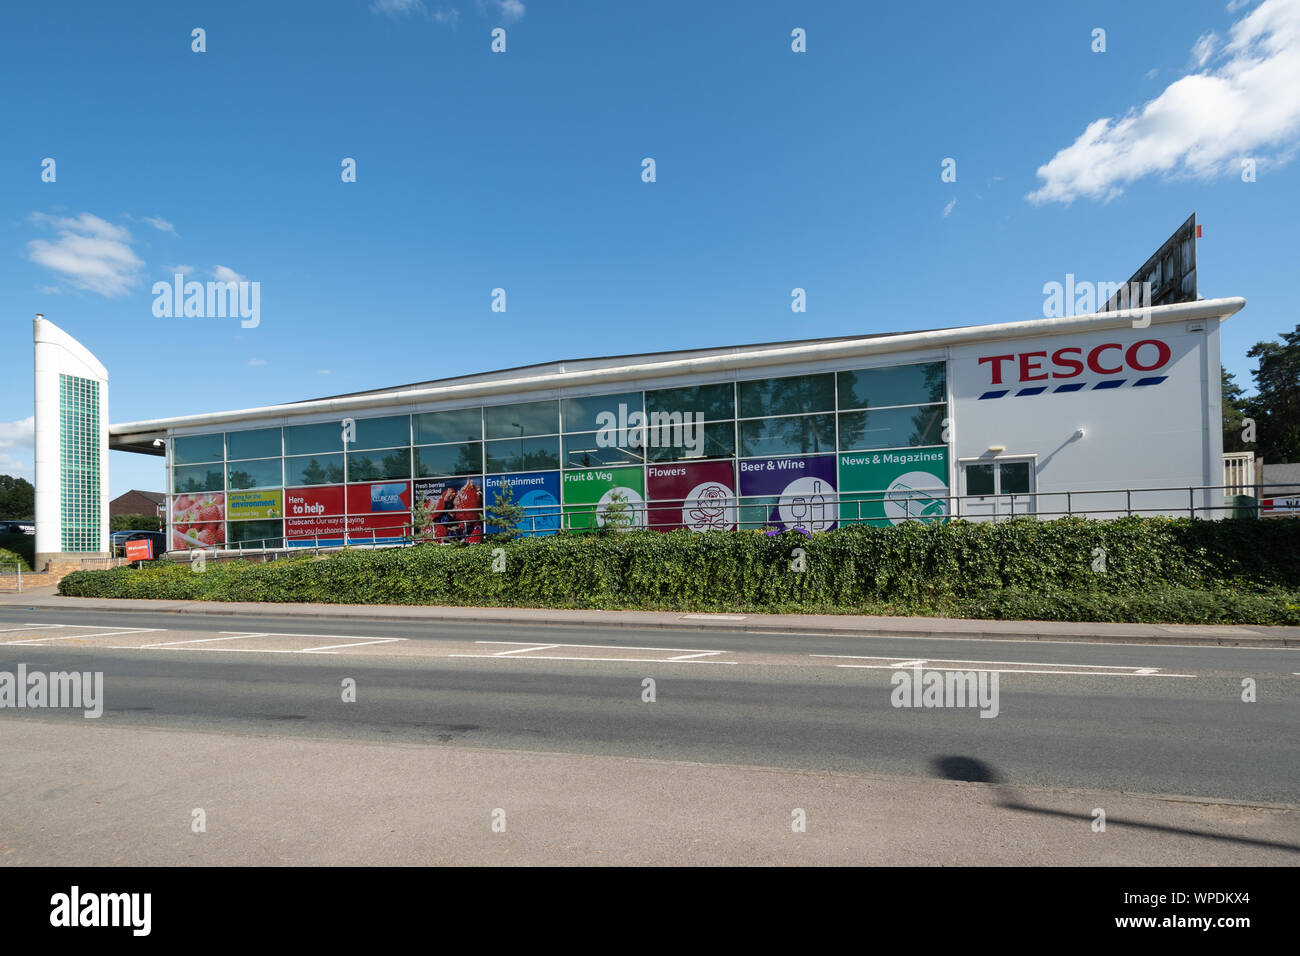 Tesco supermarket in Bordon, Hampshire, UK Stock Photo